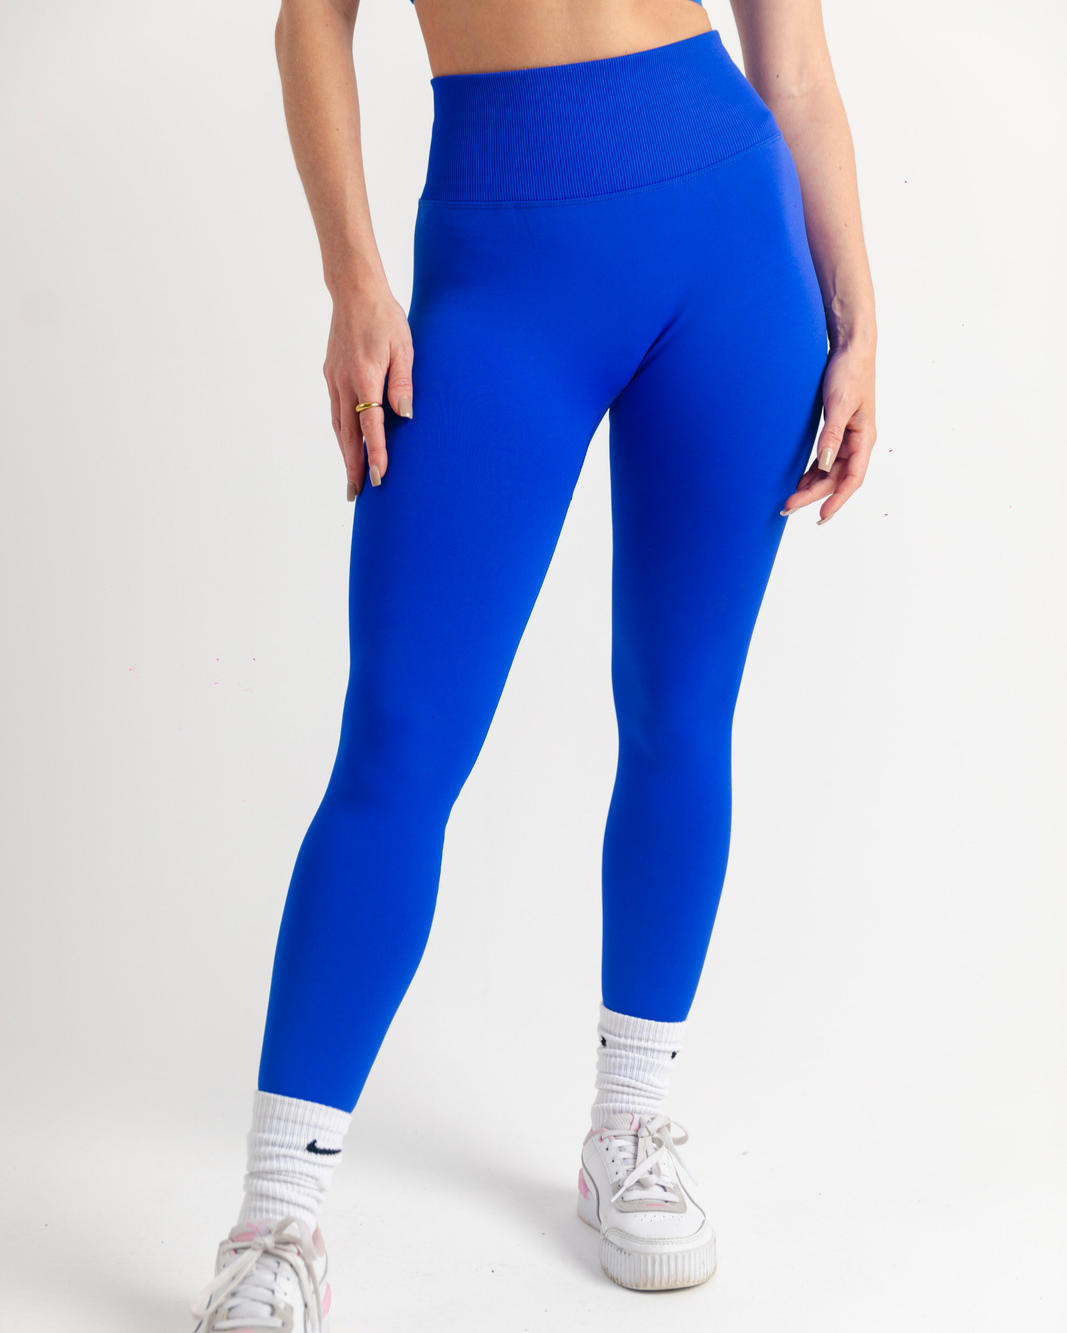 Gen 2 Electric blue leggings – New Generation Fitness